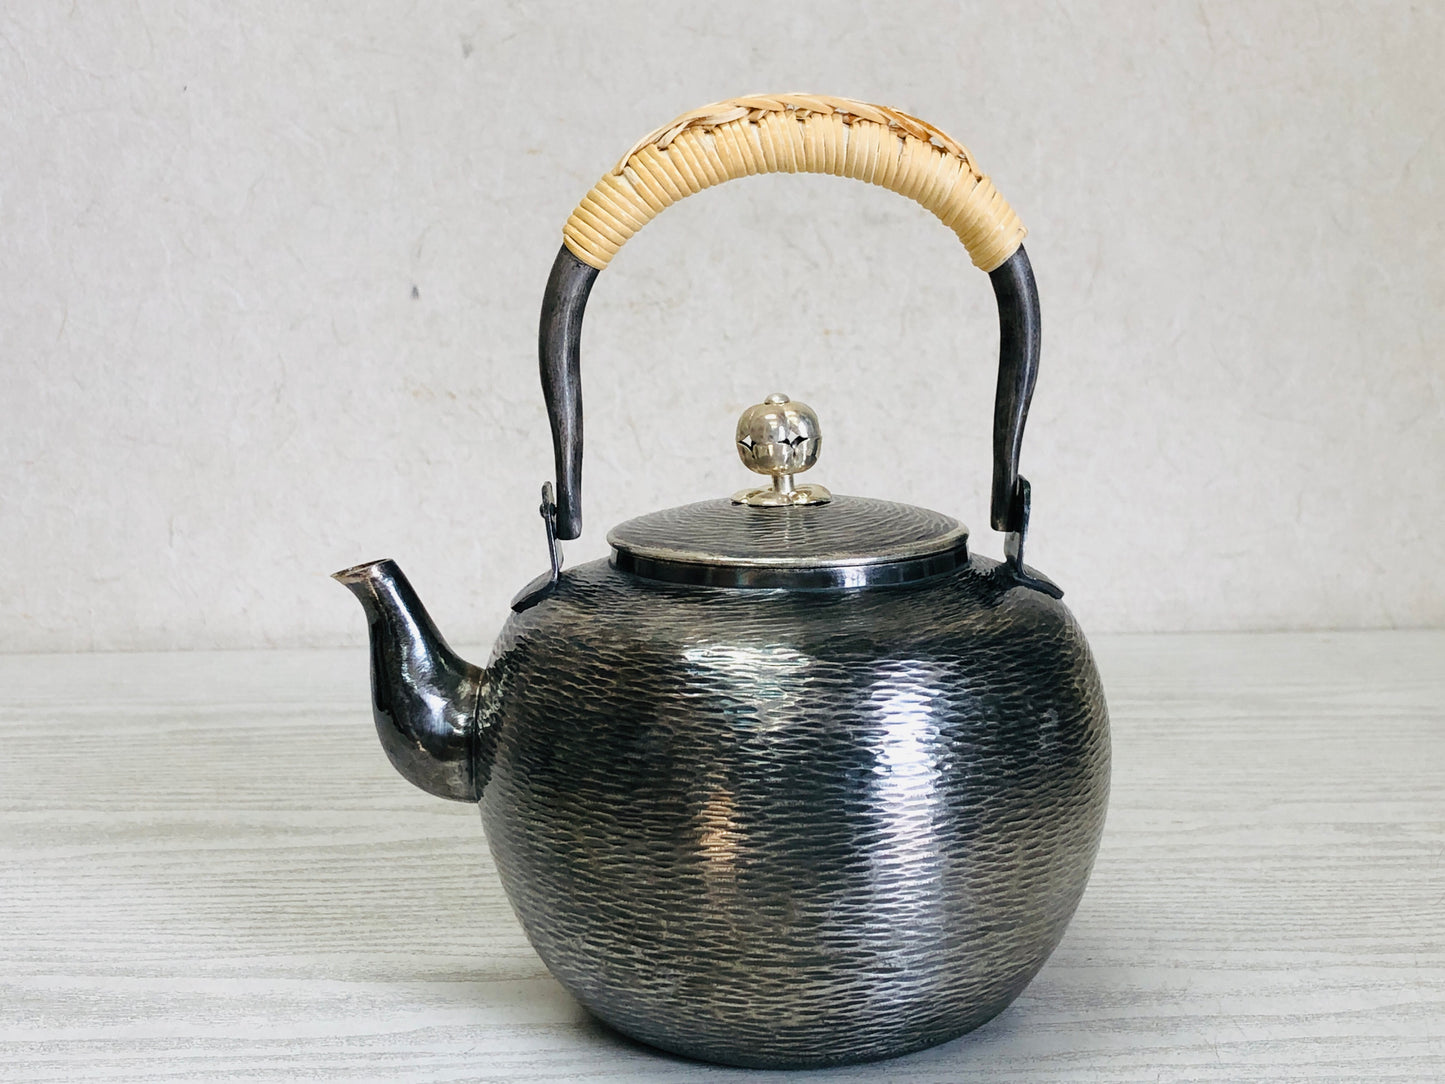 Y3545 KETTLE oxidized silver cedar pattern signed box pot Japan teapot antique